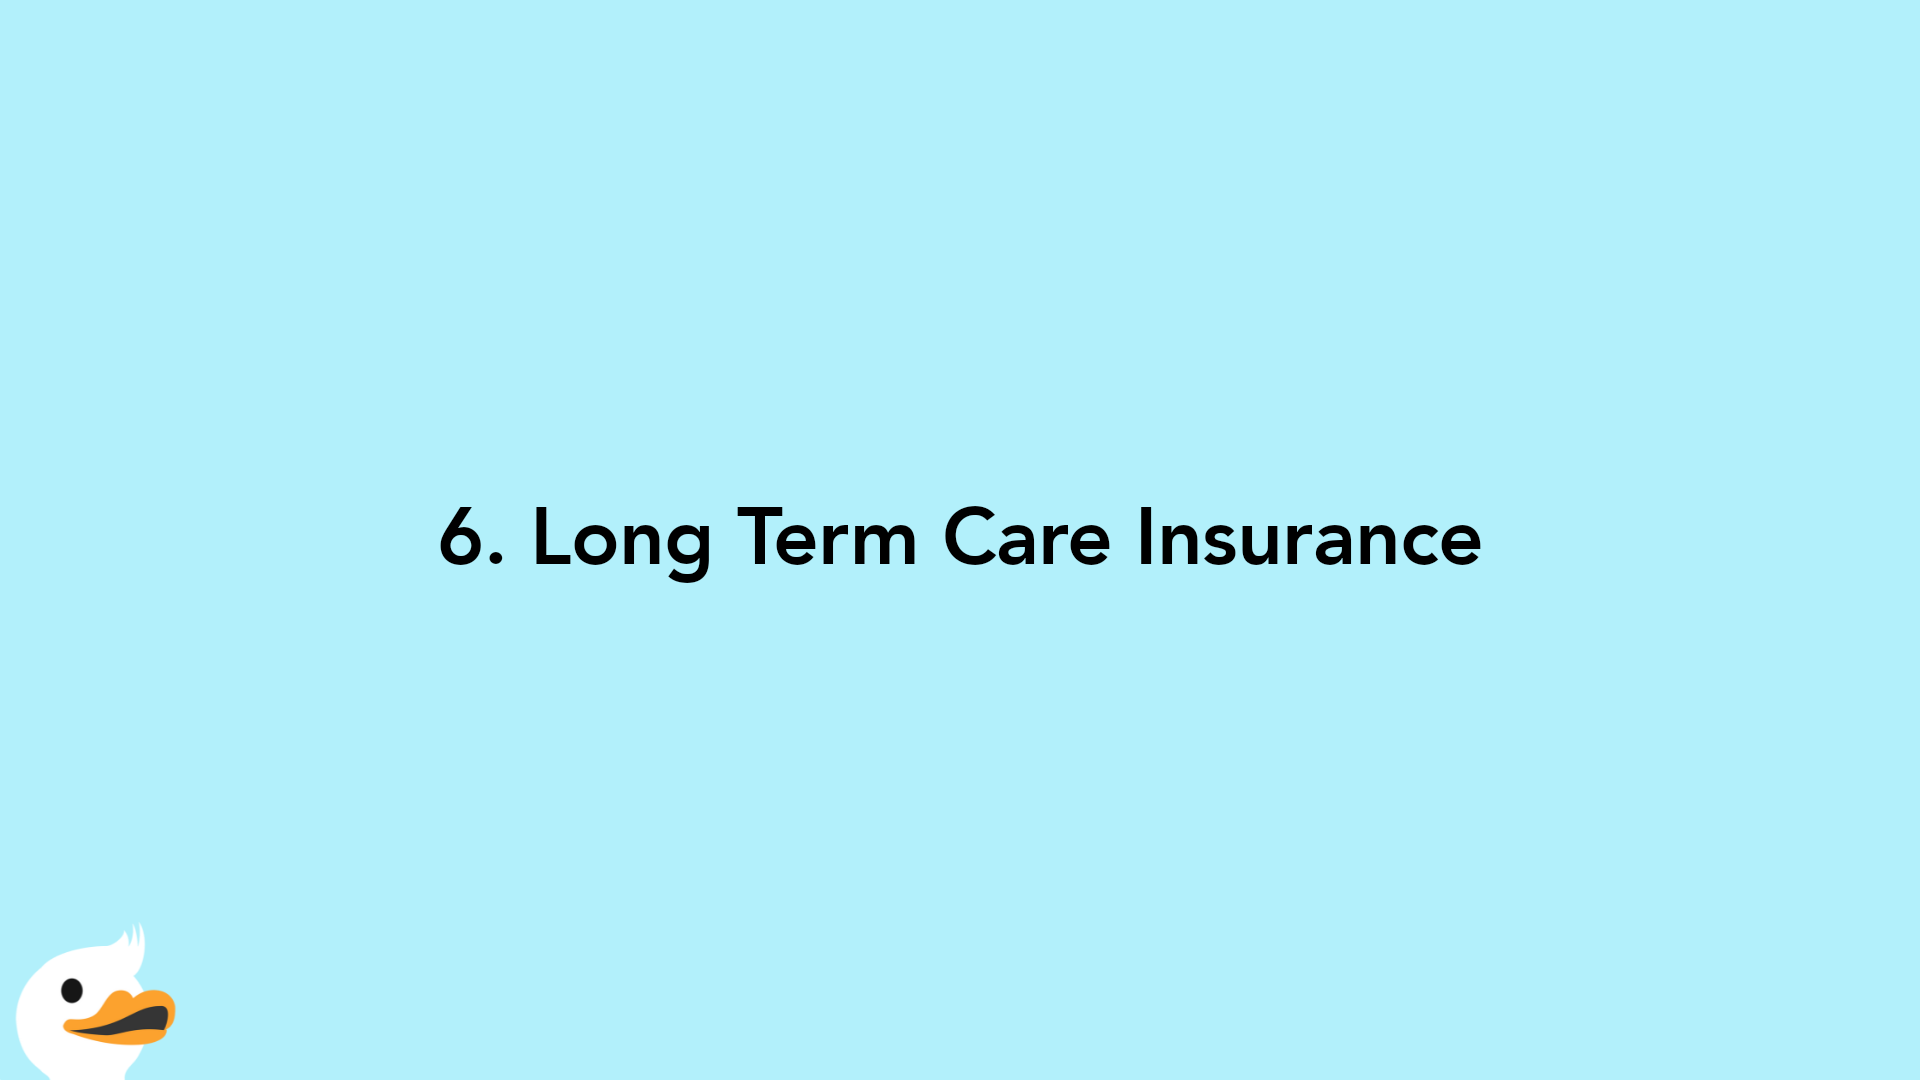 6. Long Term Care Insurance